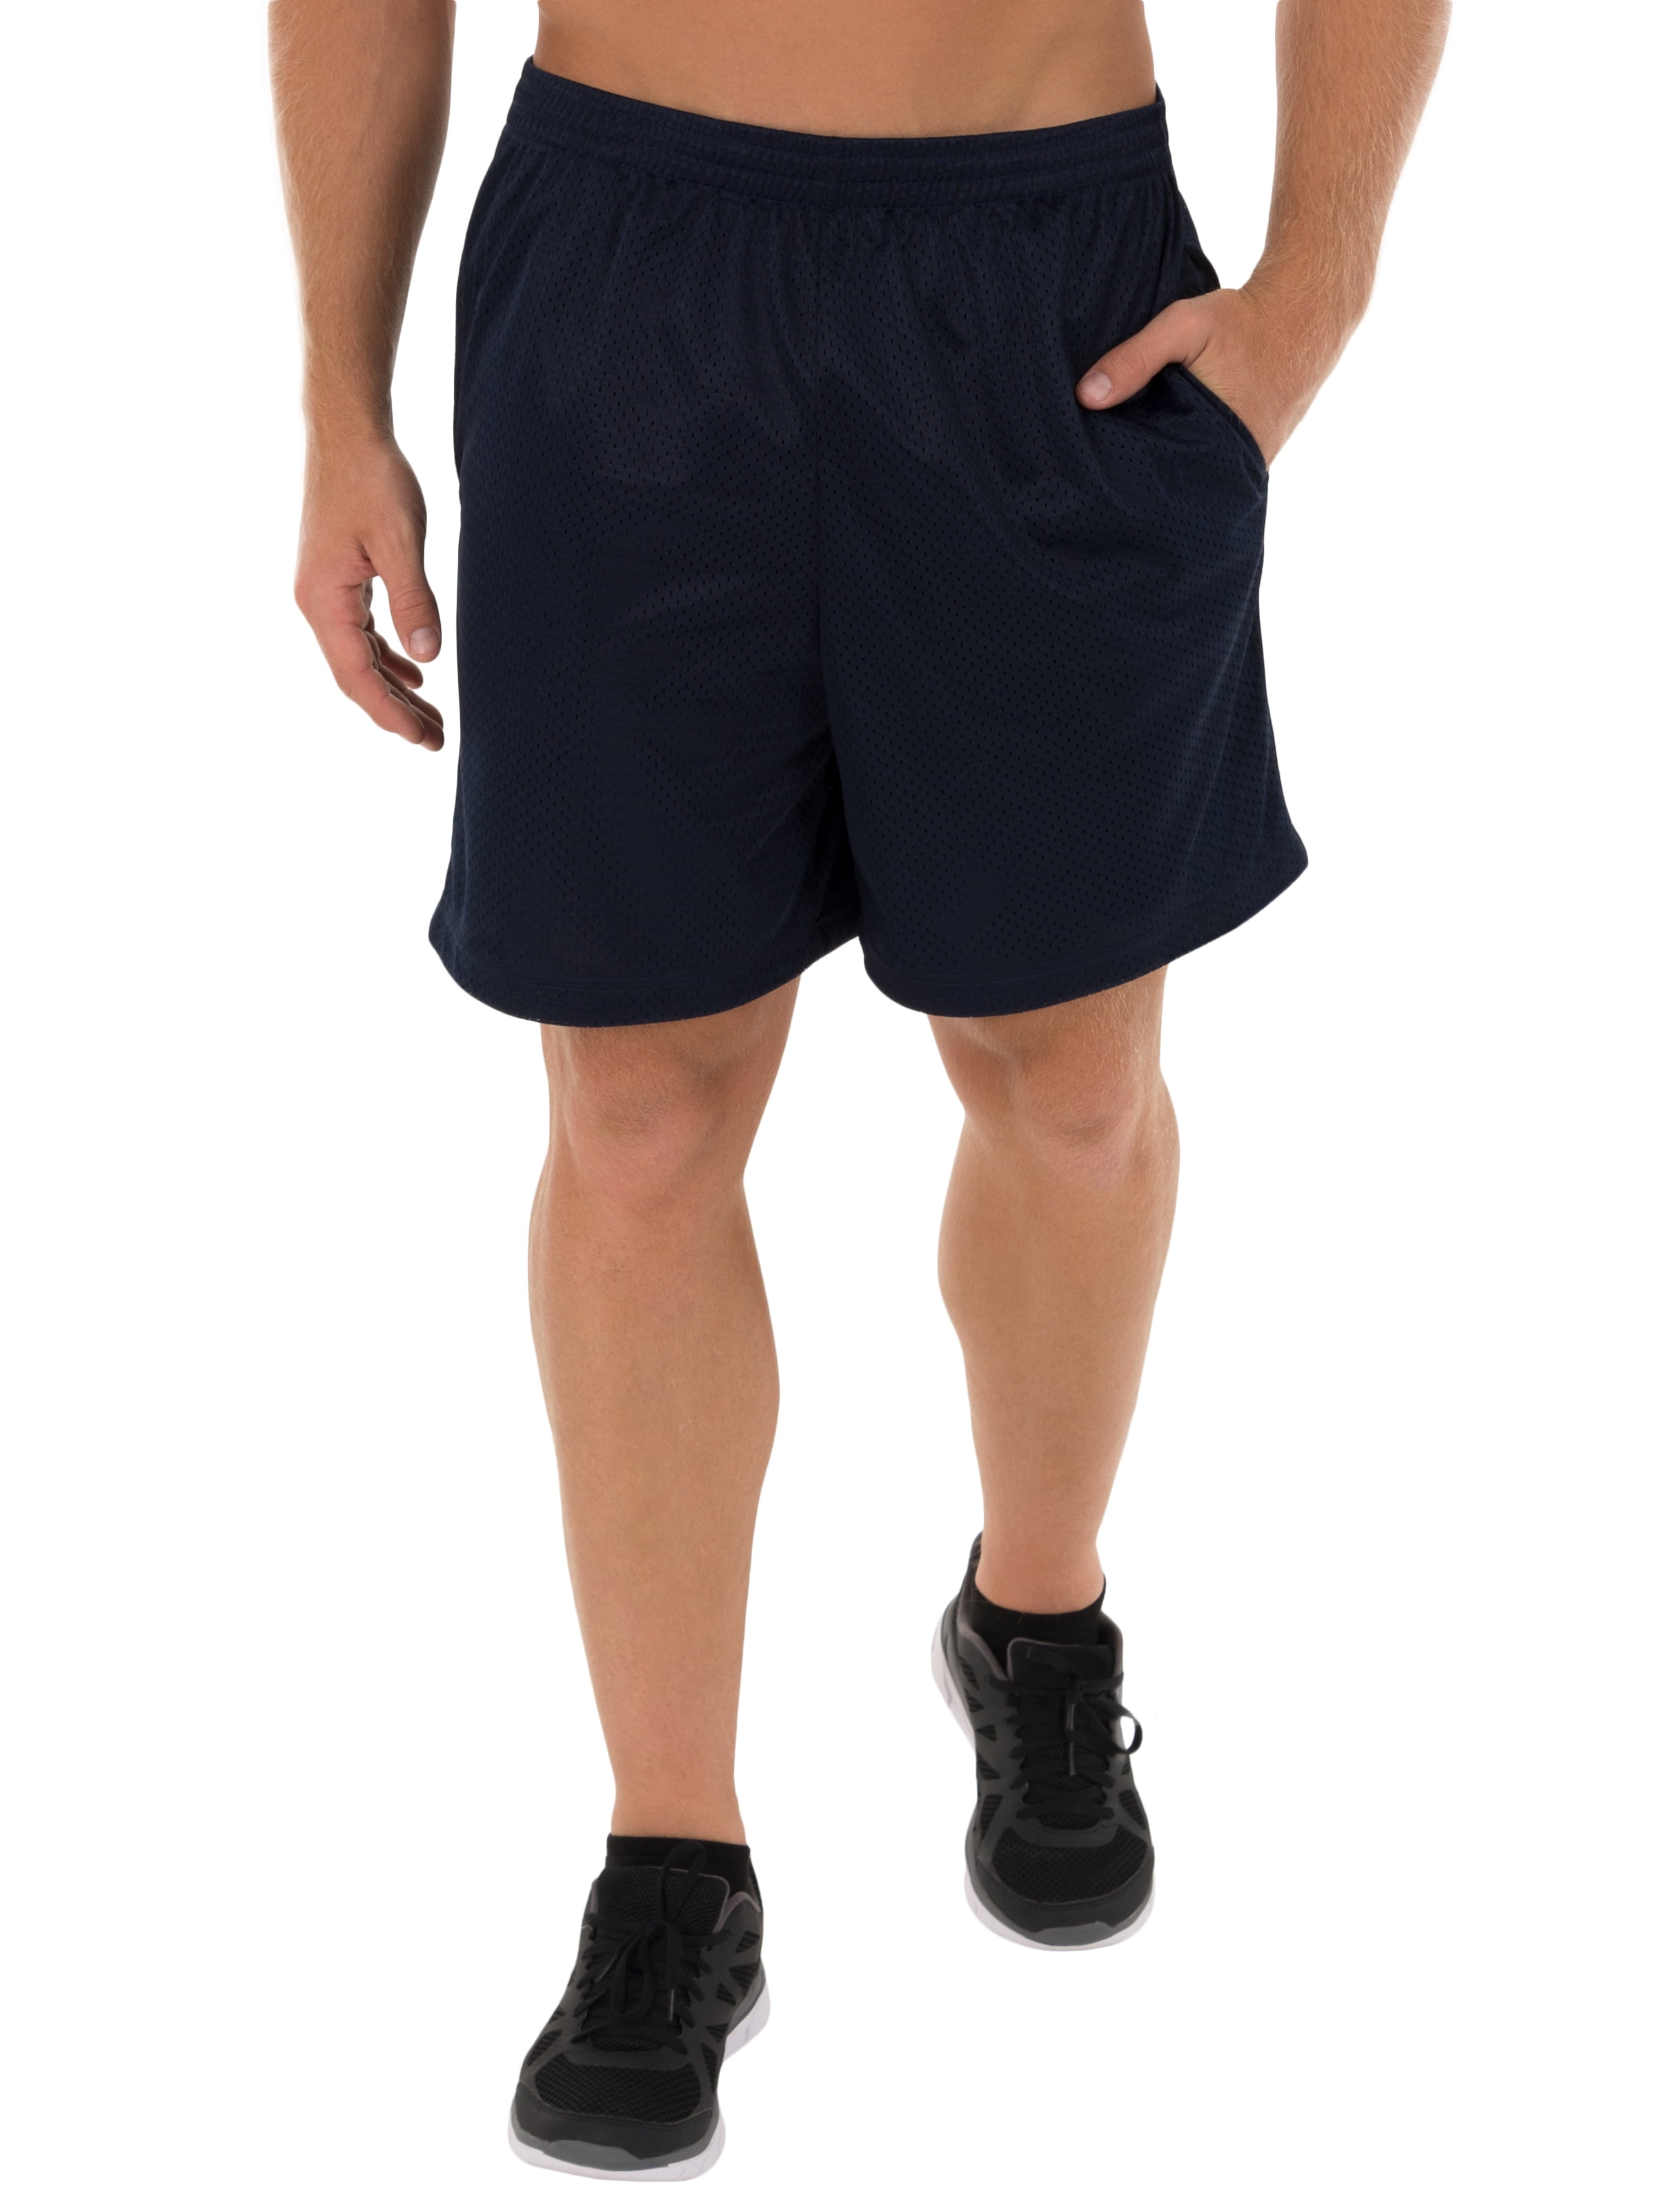 men's athletic shorts